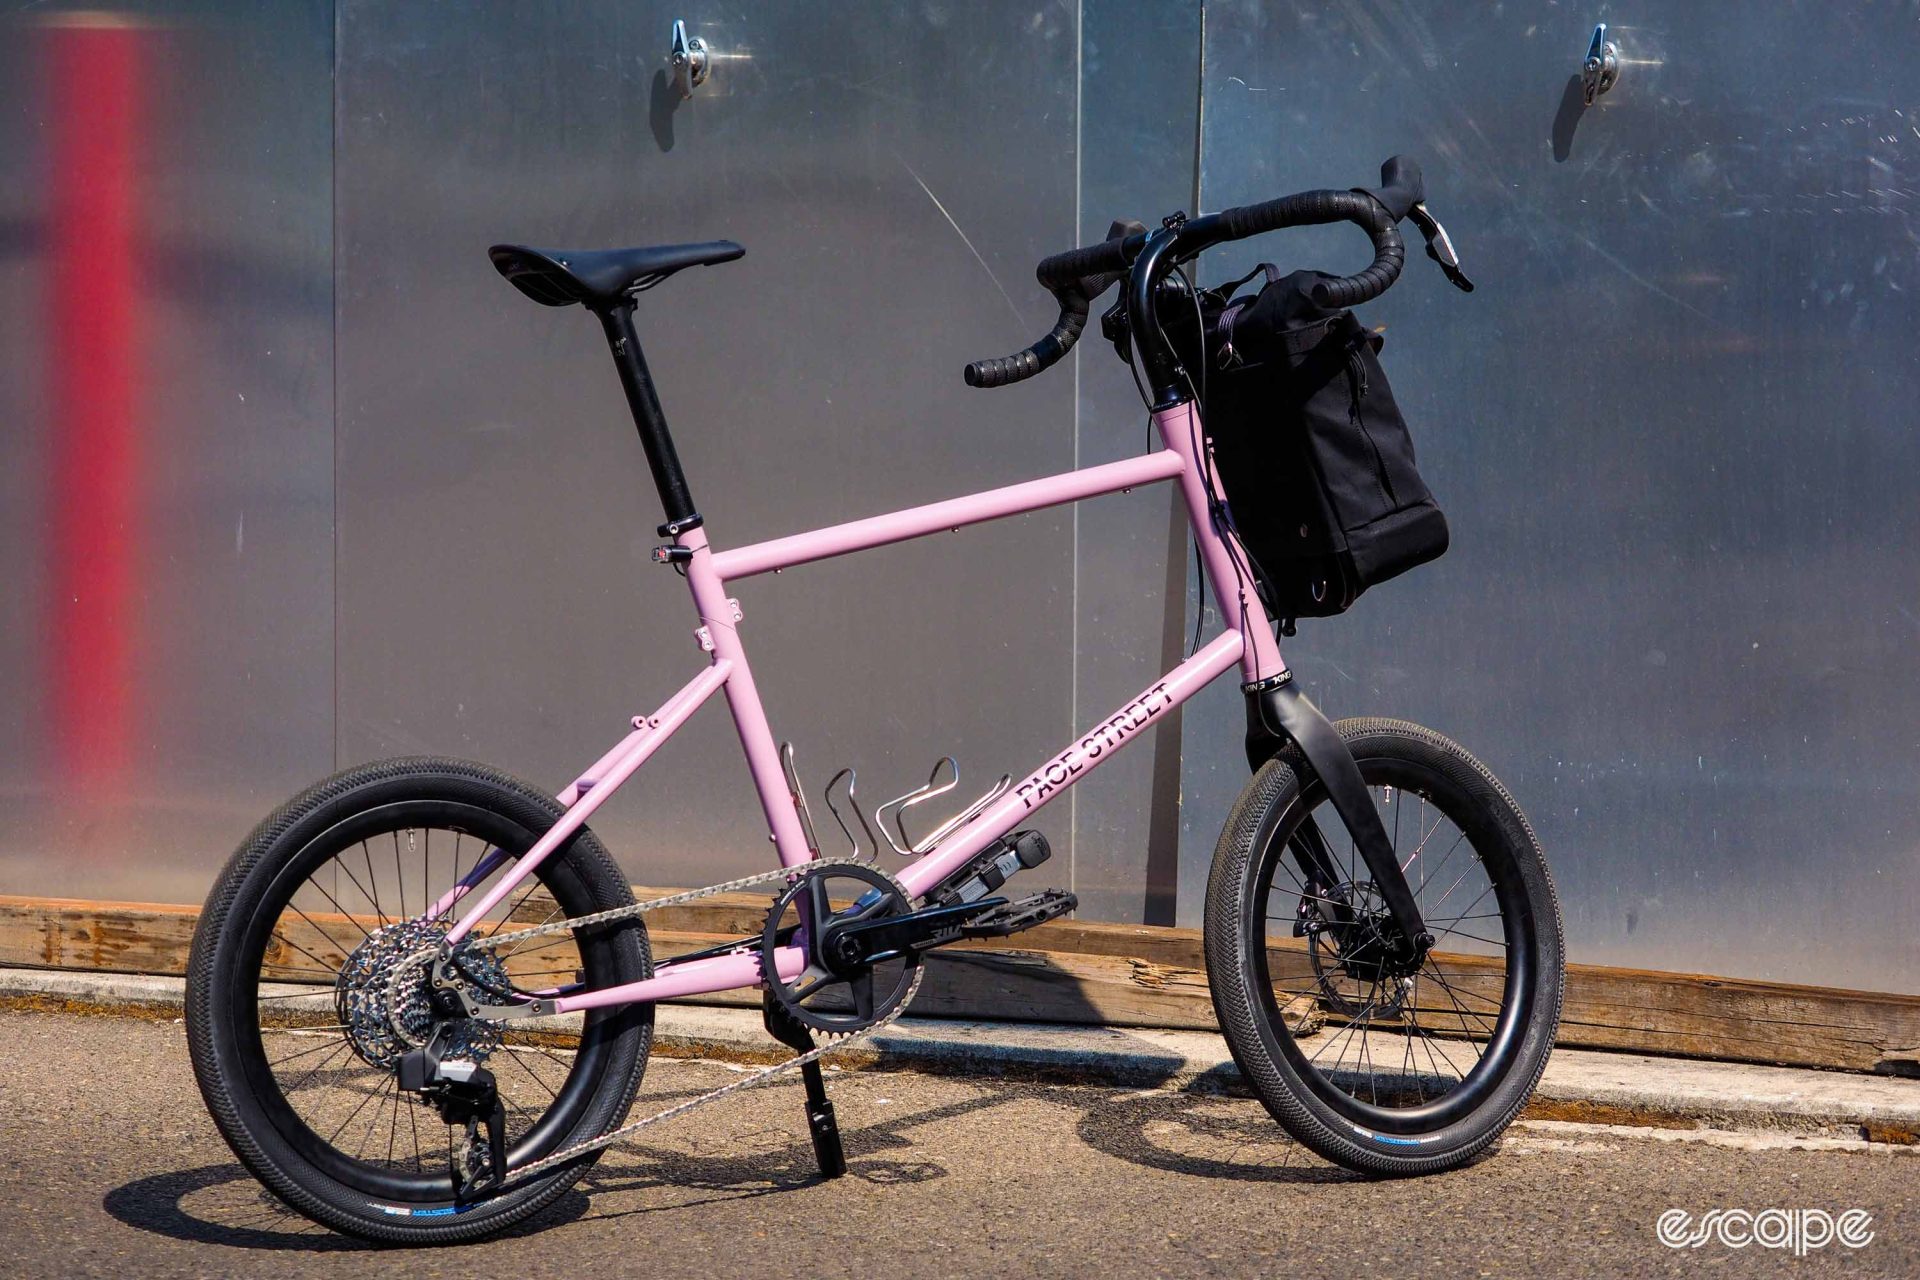 Pink travel bike with drop handlebars.